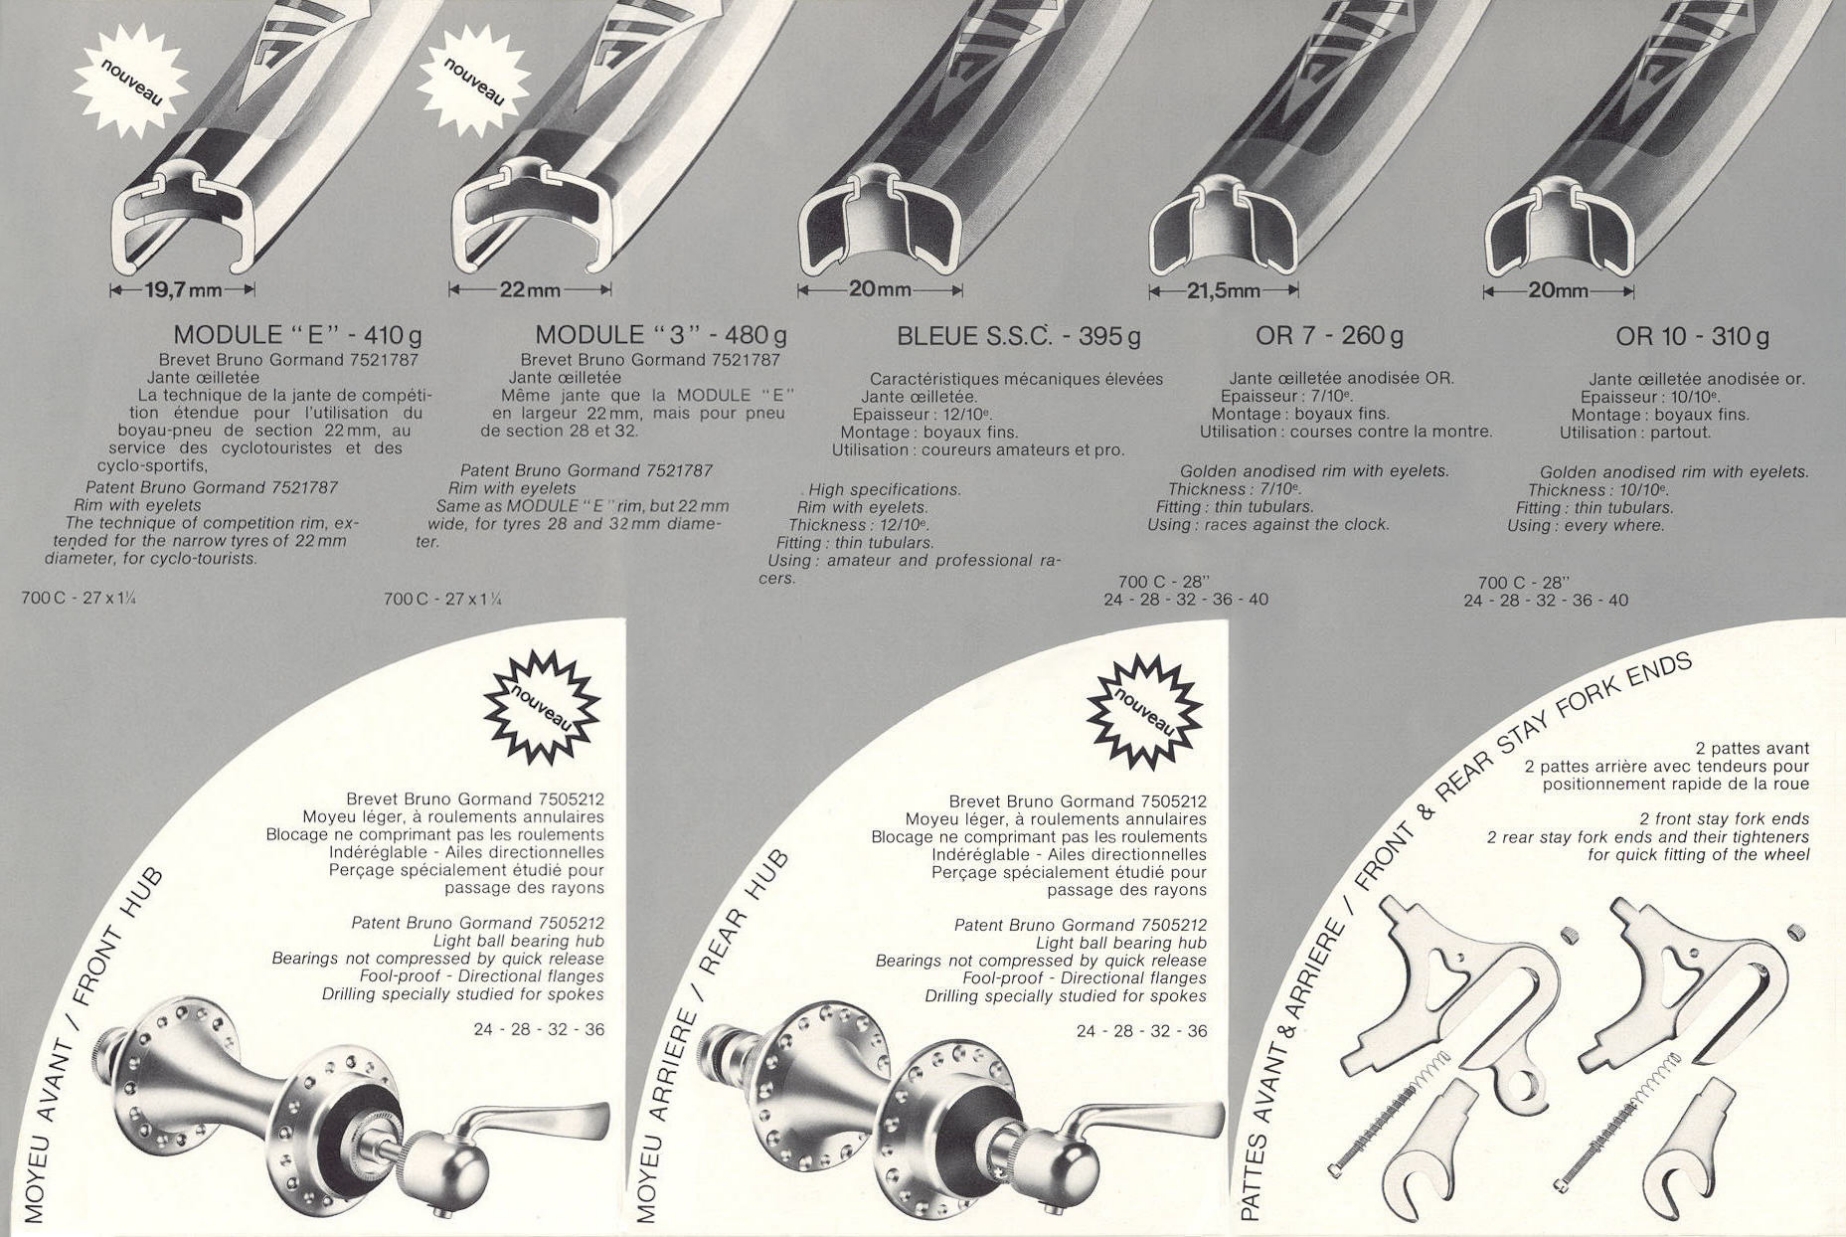 MAVIC brochure (1976)